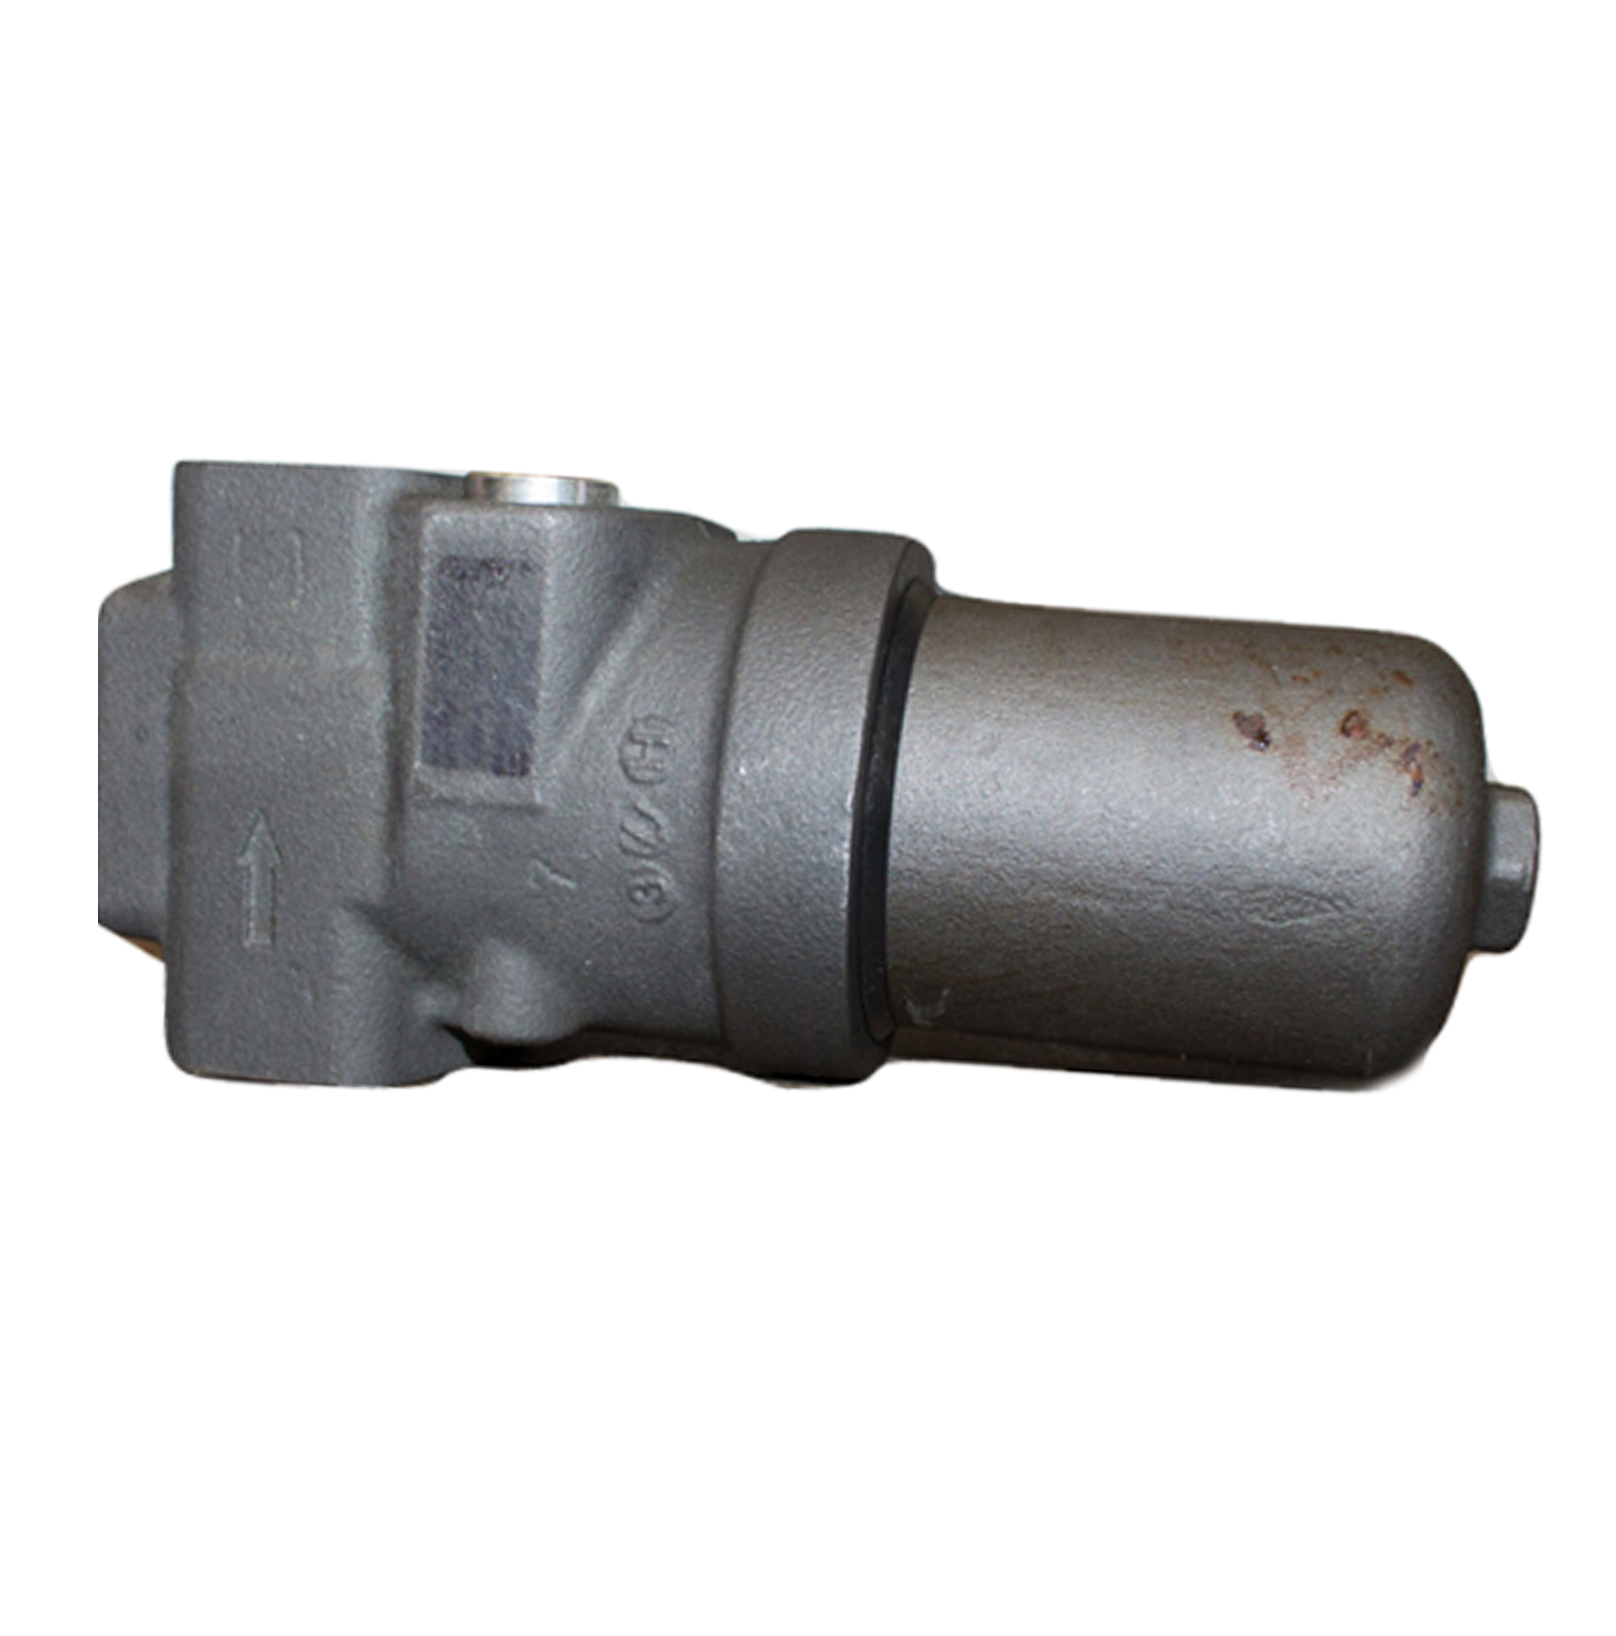 Ikron HF 760, 1" BSP, 25 Micron, In Line High Pressure Filter, HF760-40.227-AS-FG010-LC-B60-GF-B-A-XA-H